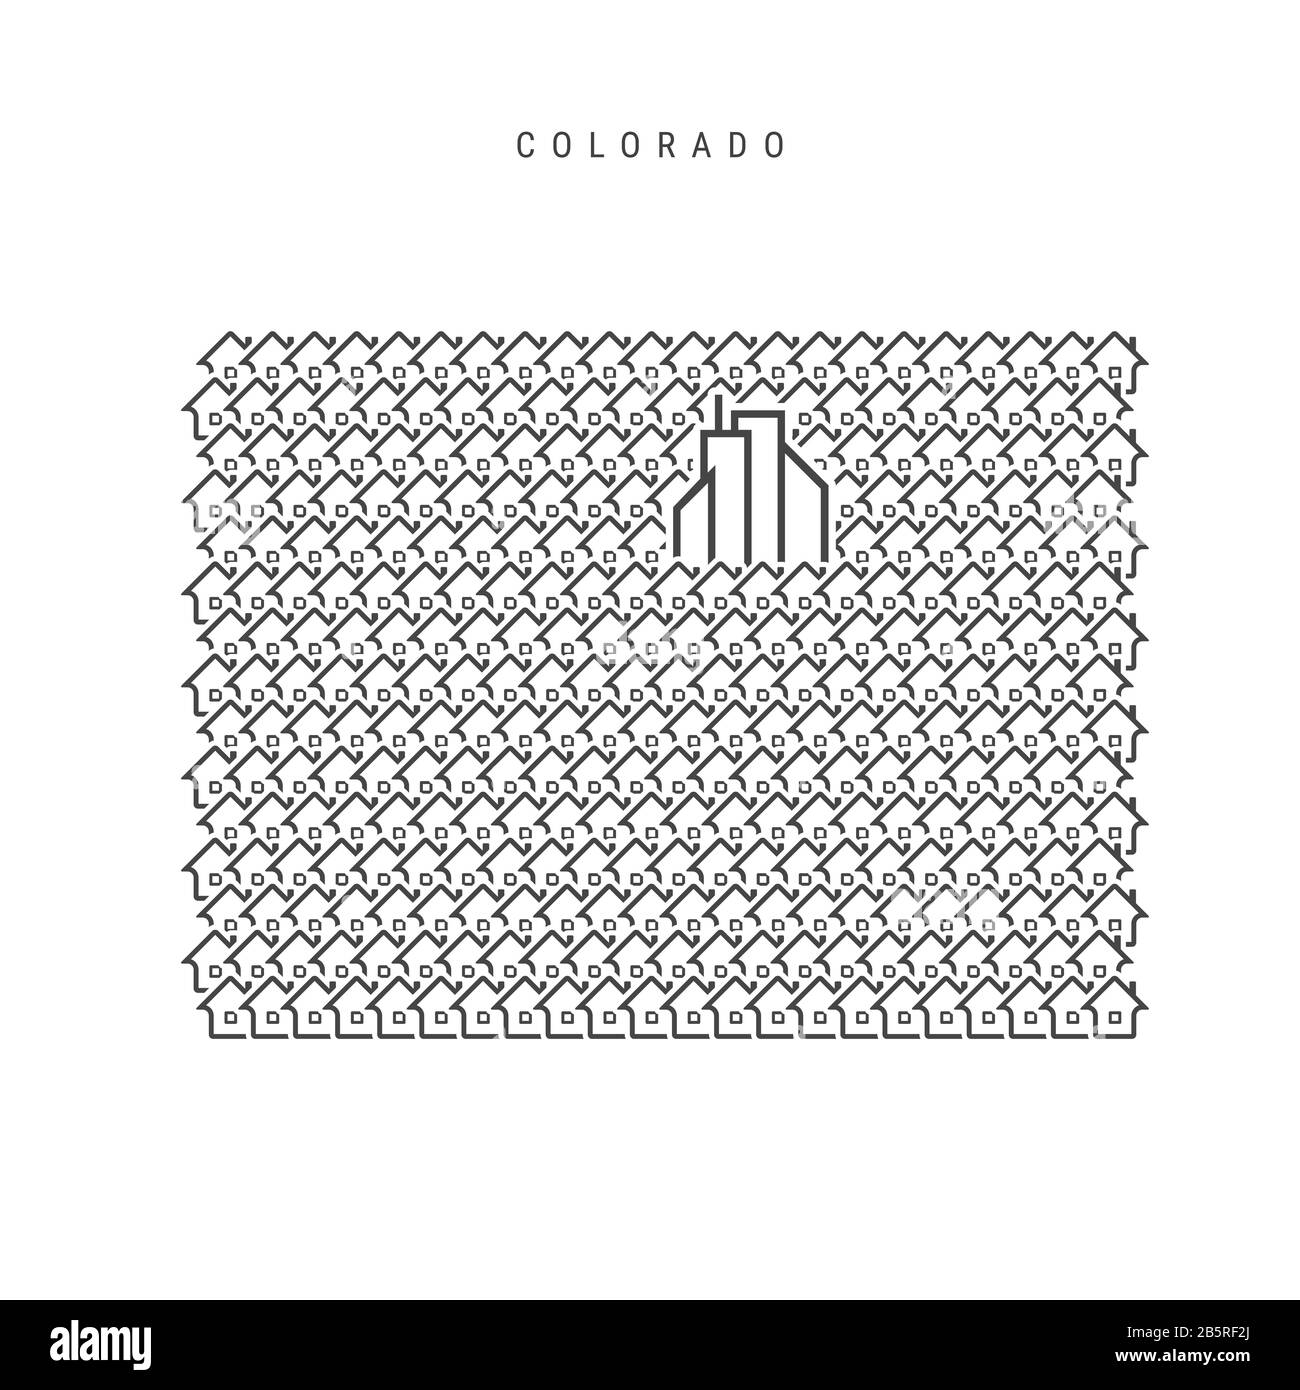 Colorado Rockies Coloring Page - Coloring Squared